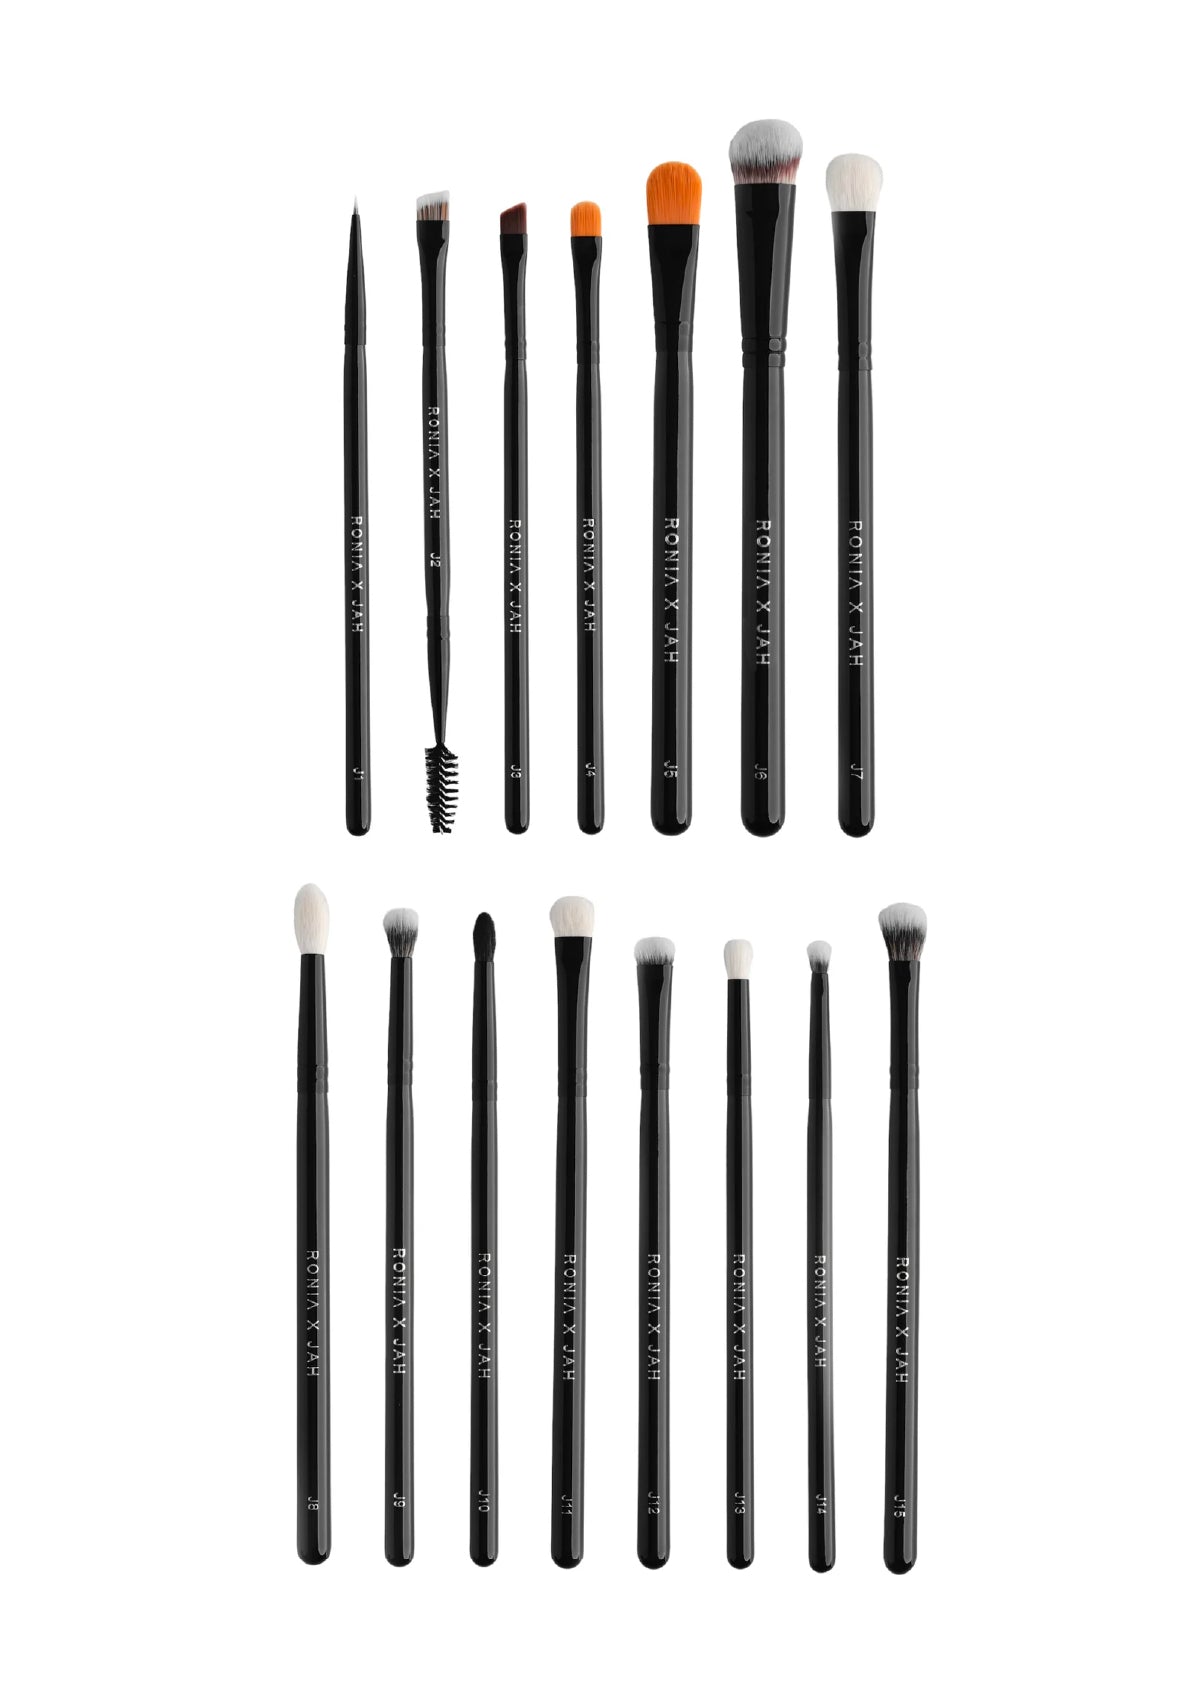 15 Sleek Eye Brush Set with Brush holder